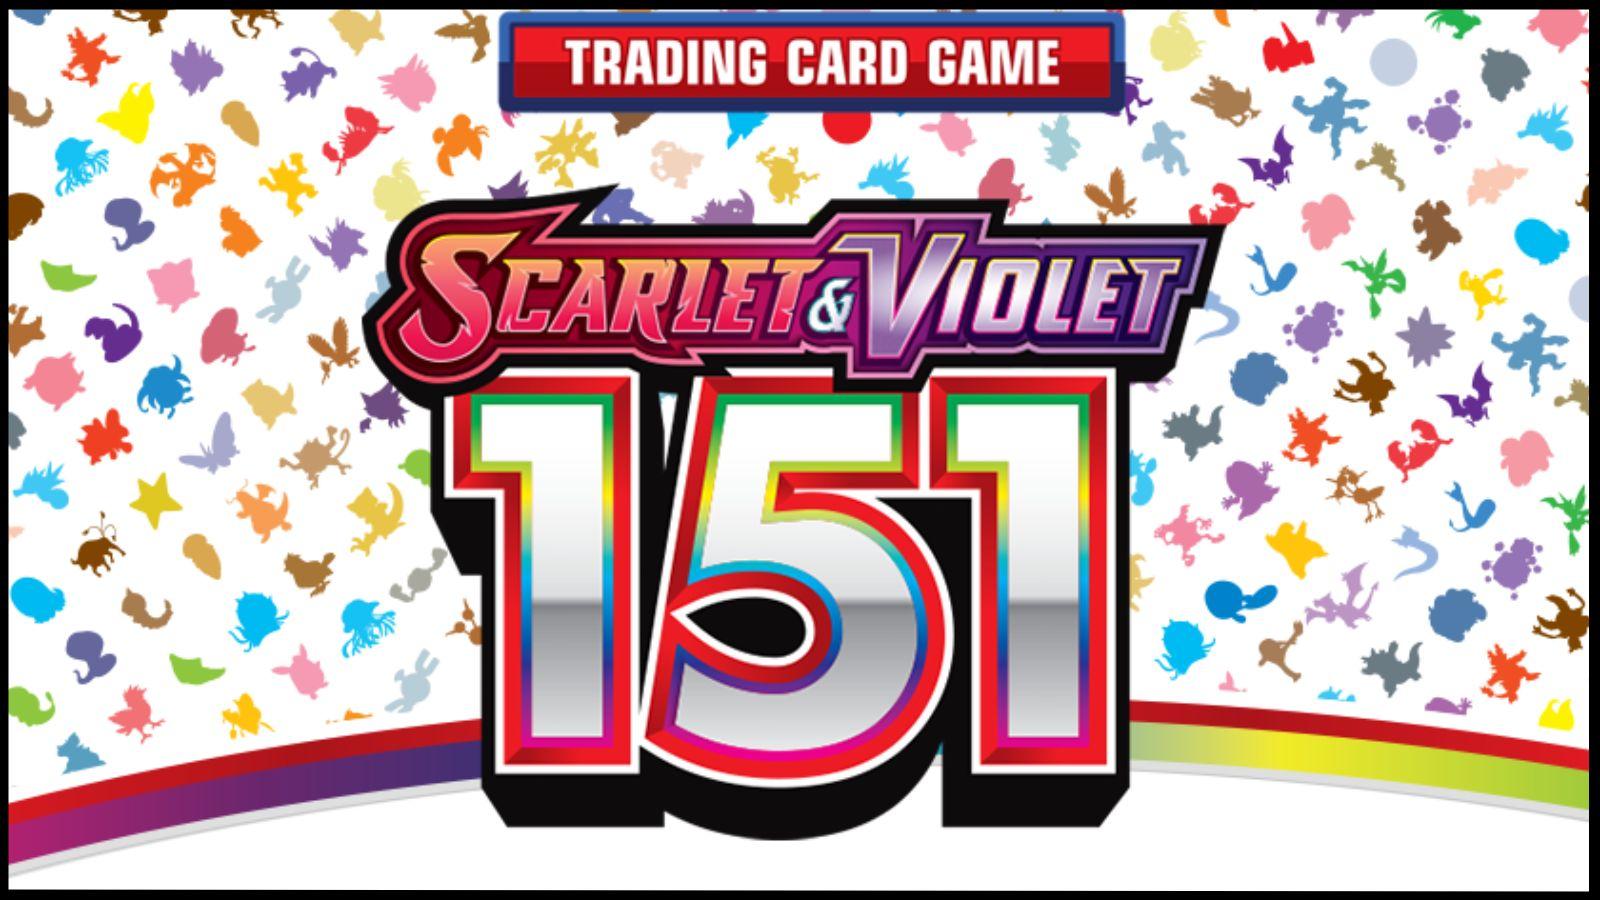 Mew ex - Scarlet & Violet - 151 #151 Pokemon Card